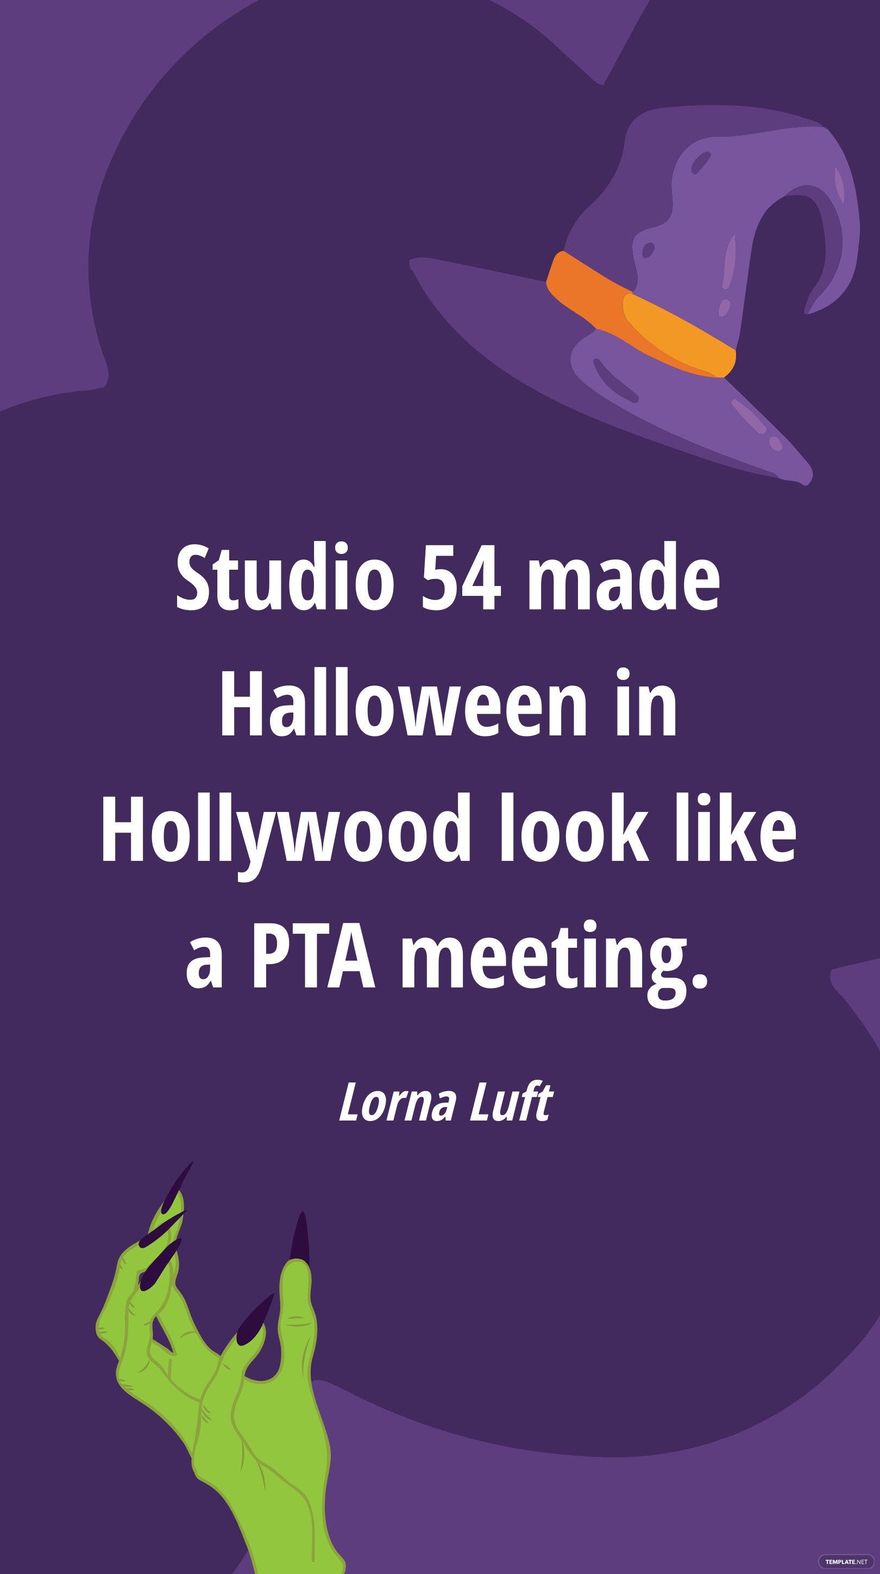 Free Lorna Luft - Studio 54 made Halloween in Hollywood look like a PTA meeting.